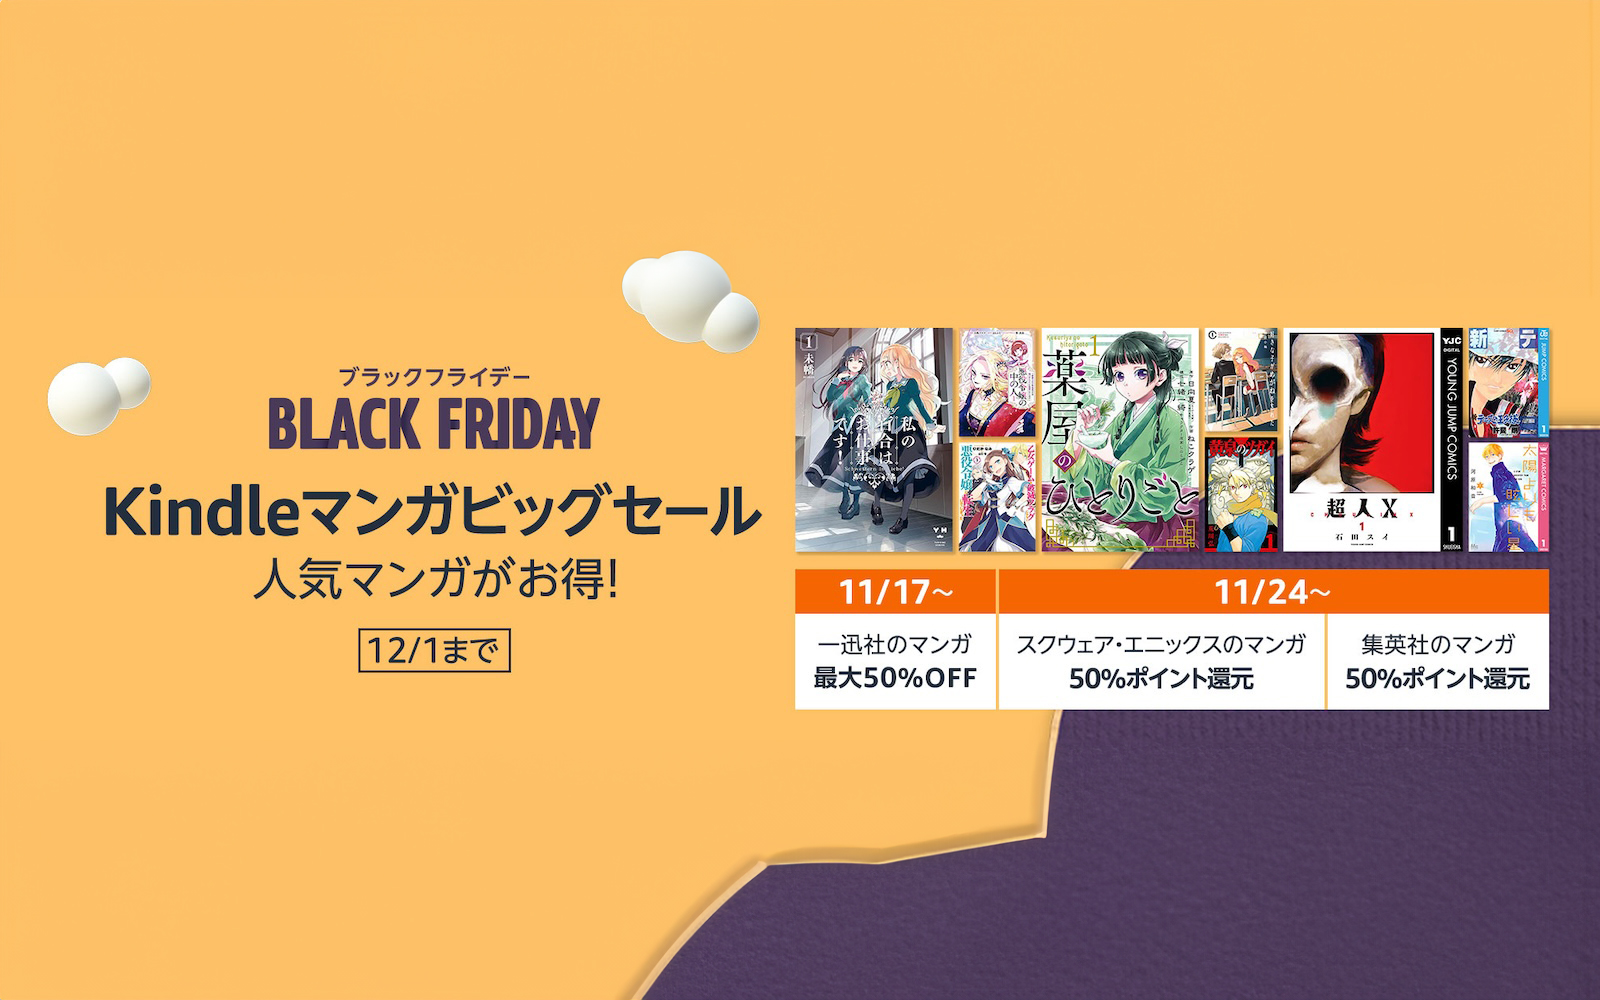 Kindle Black Friday Manga sale